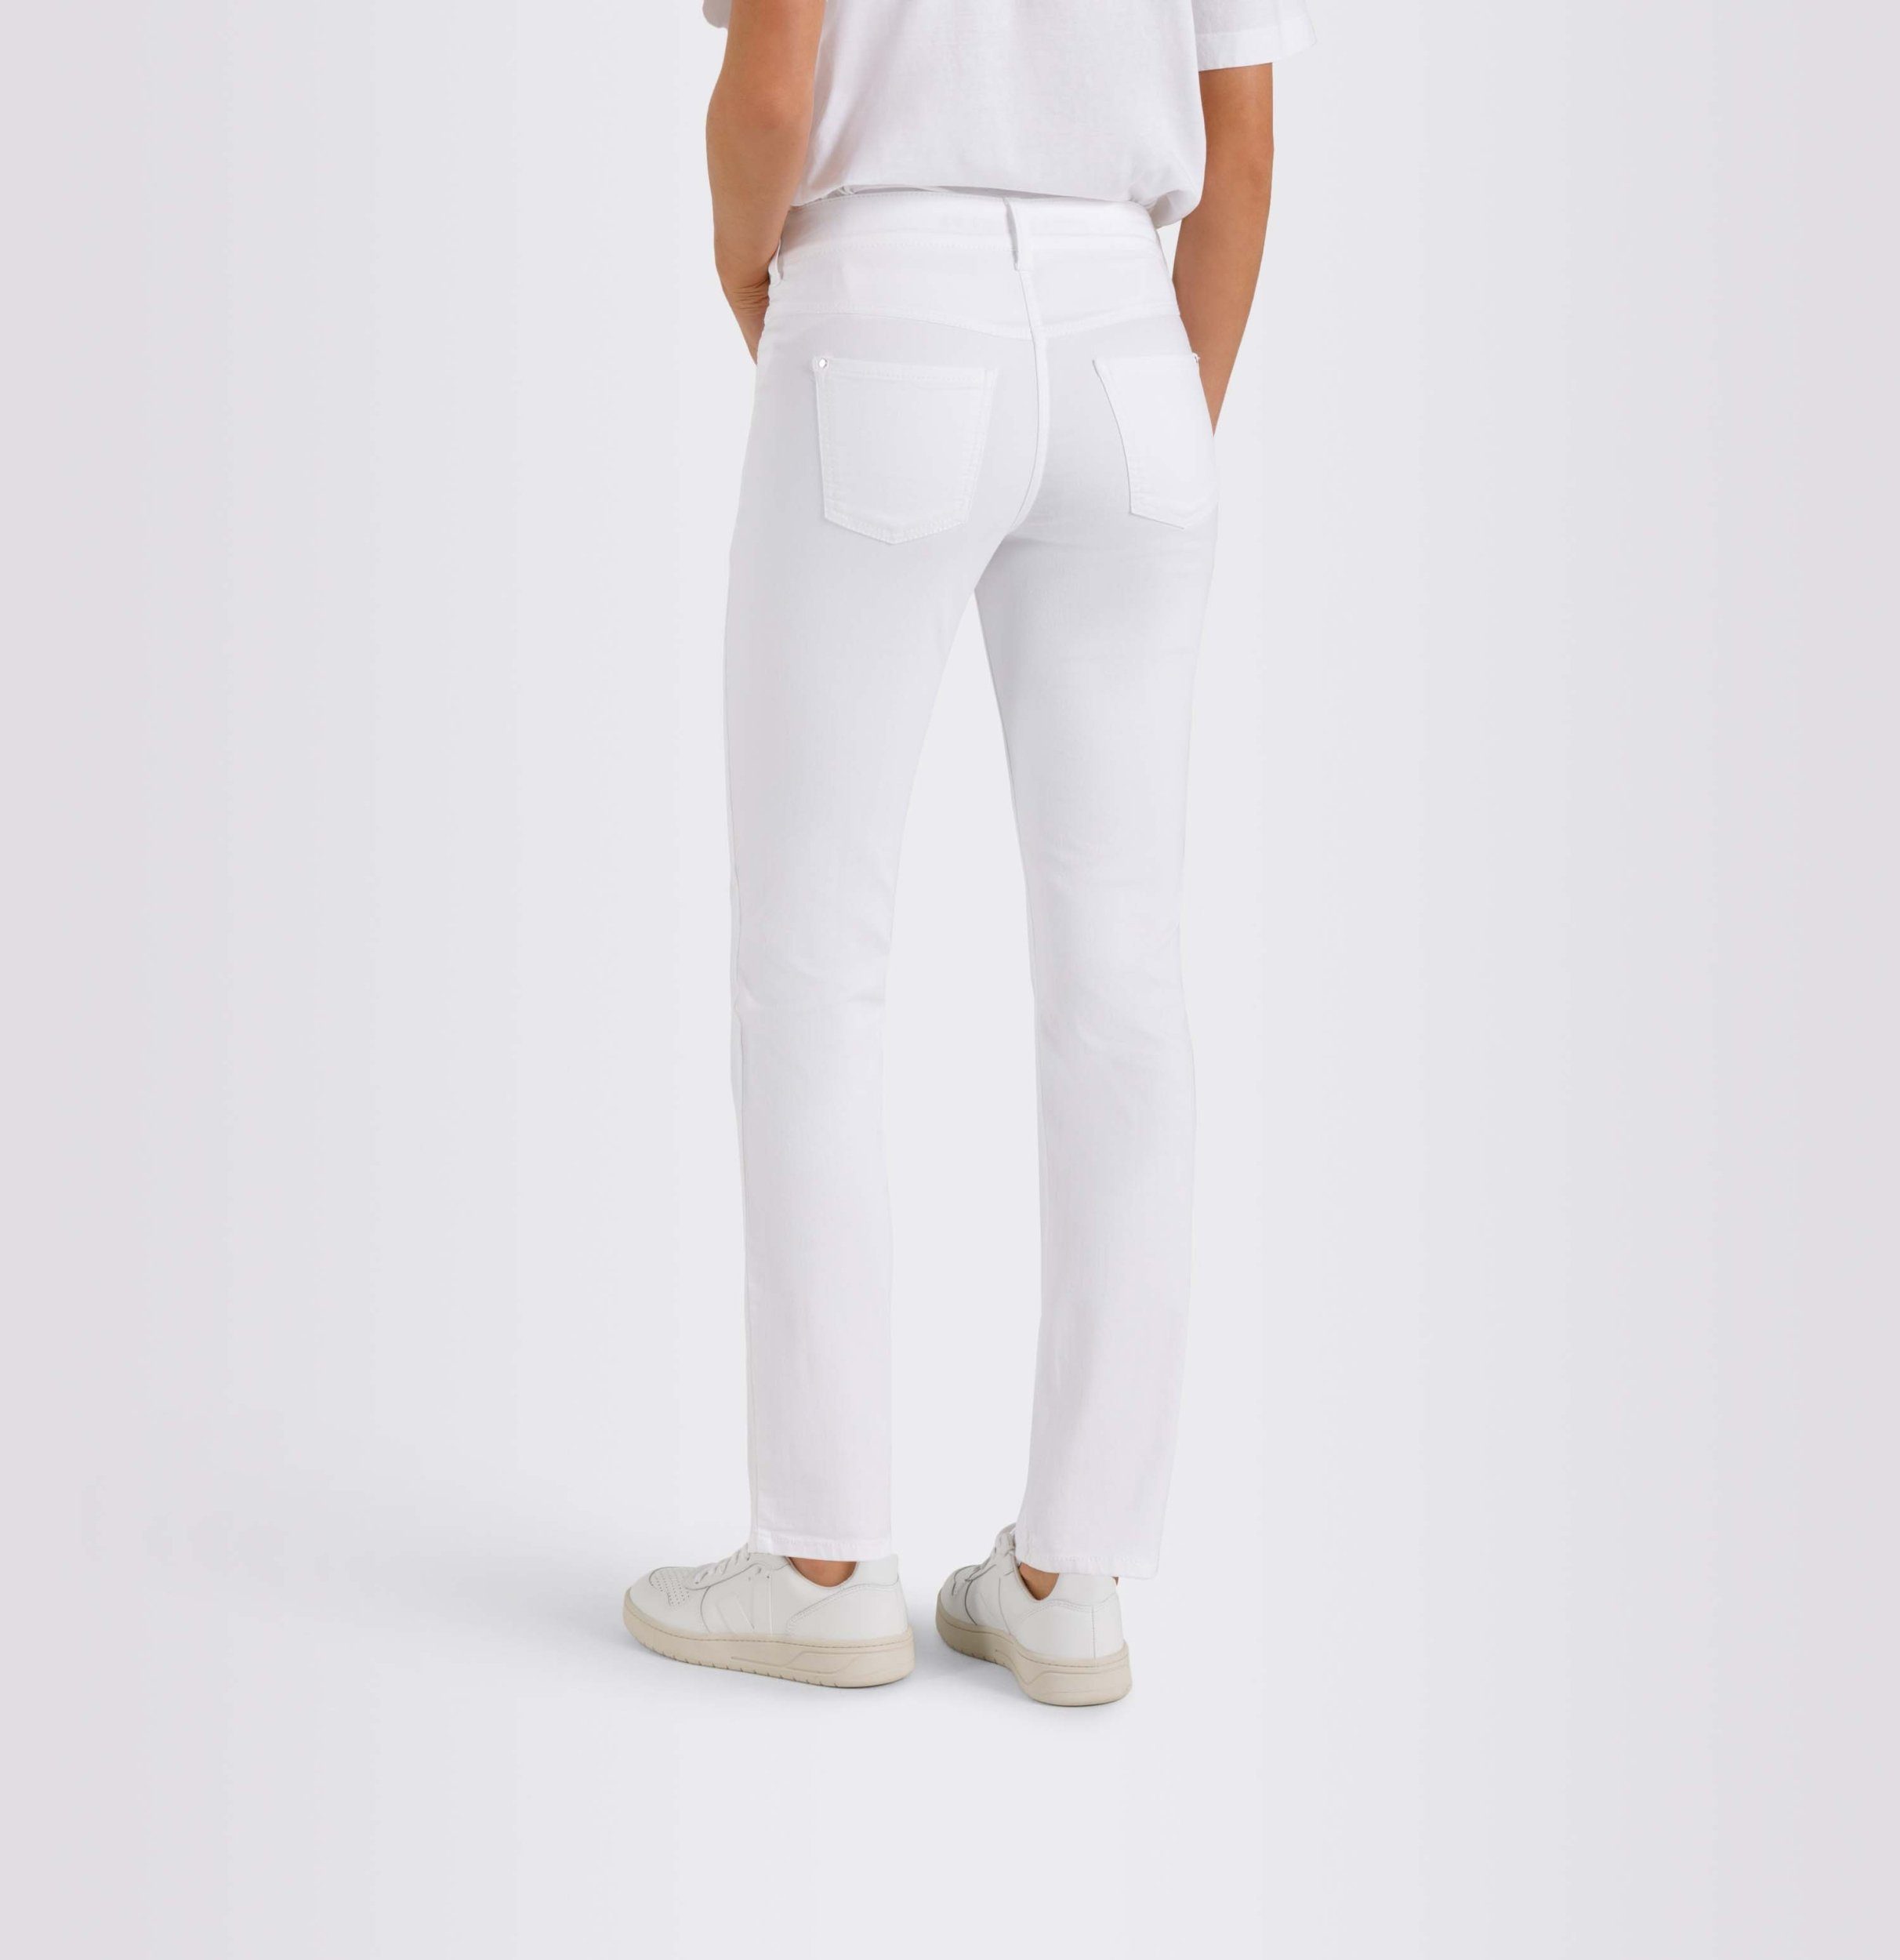 5-Pocket-Jeans MAC JEANS - DREAM, Weiß Dream denim